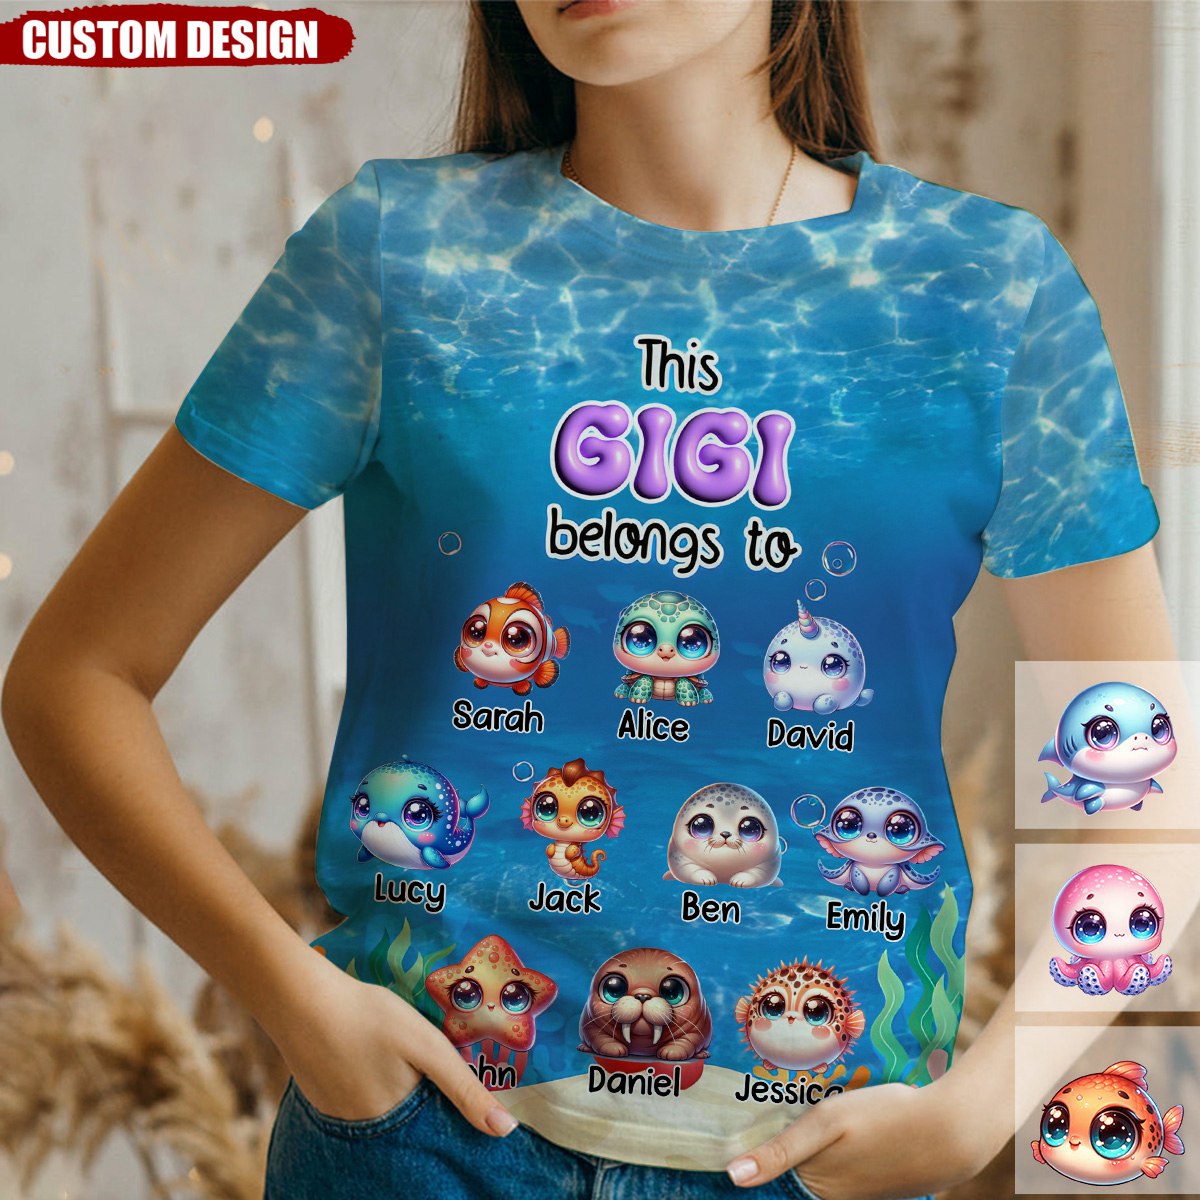 Gift For Grandma This Grandma Belongs To All-over 3D T-Shirt